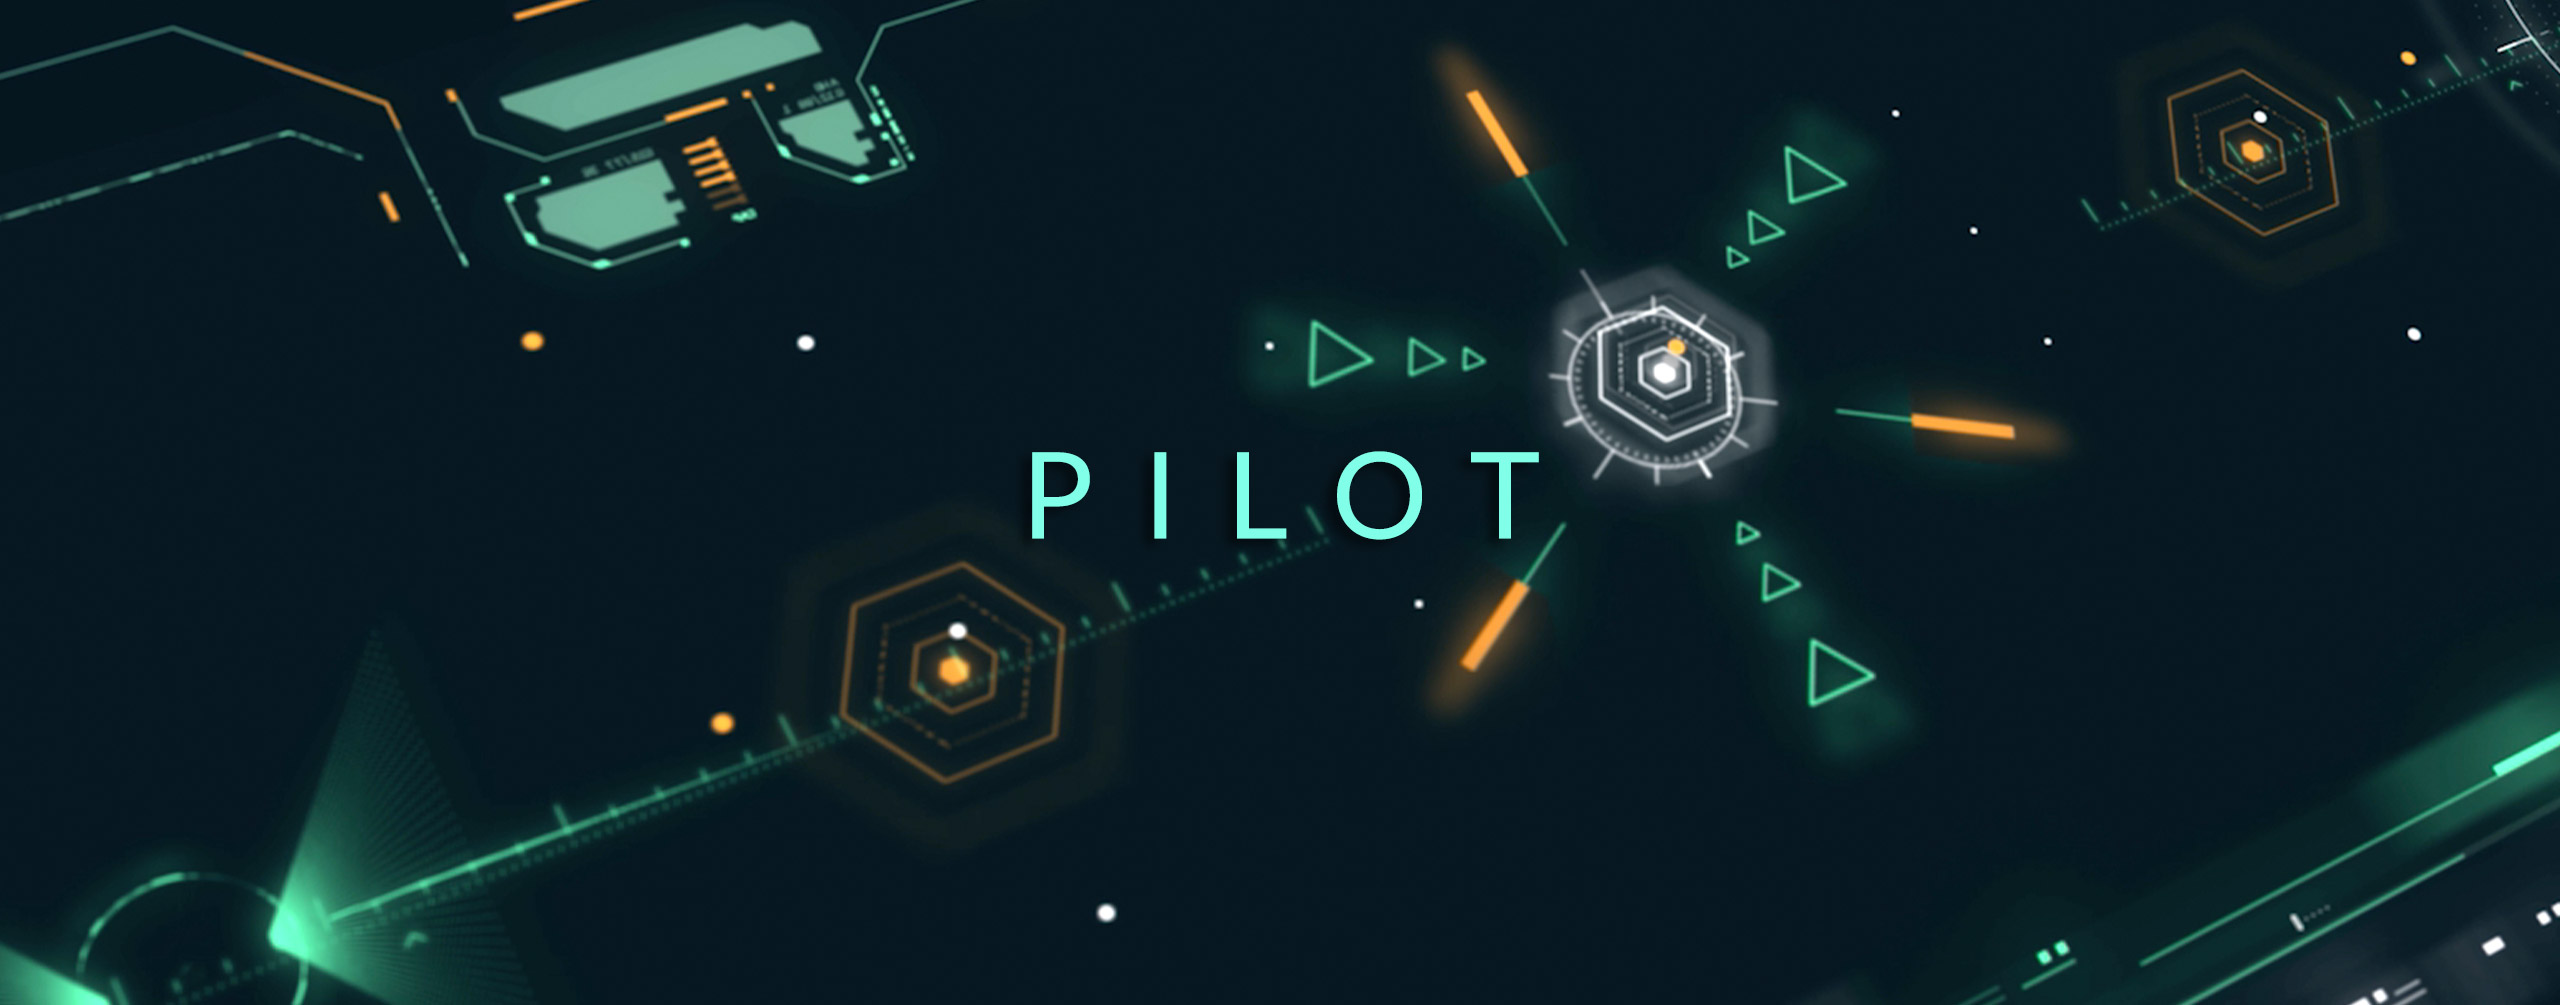 Pilot - Futuristic HUD Effects